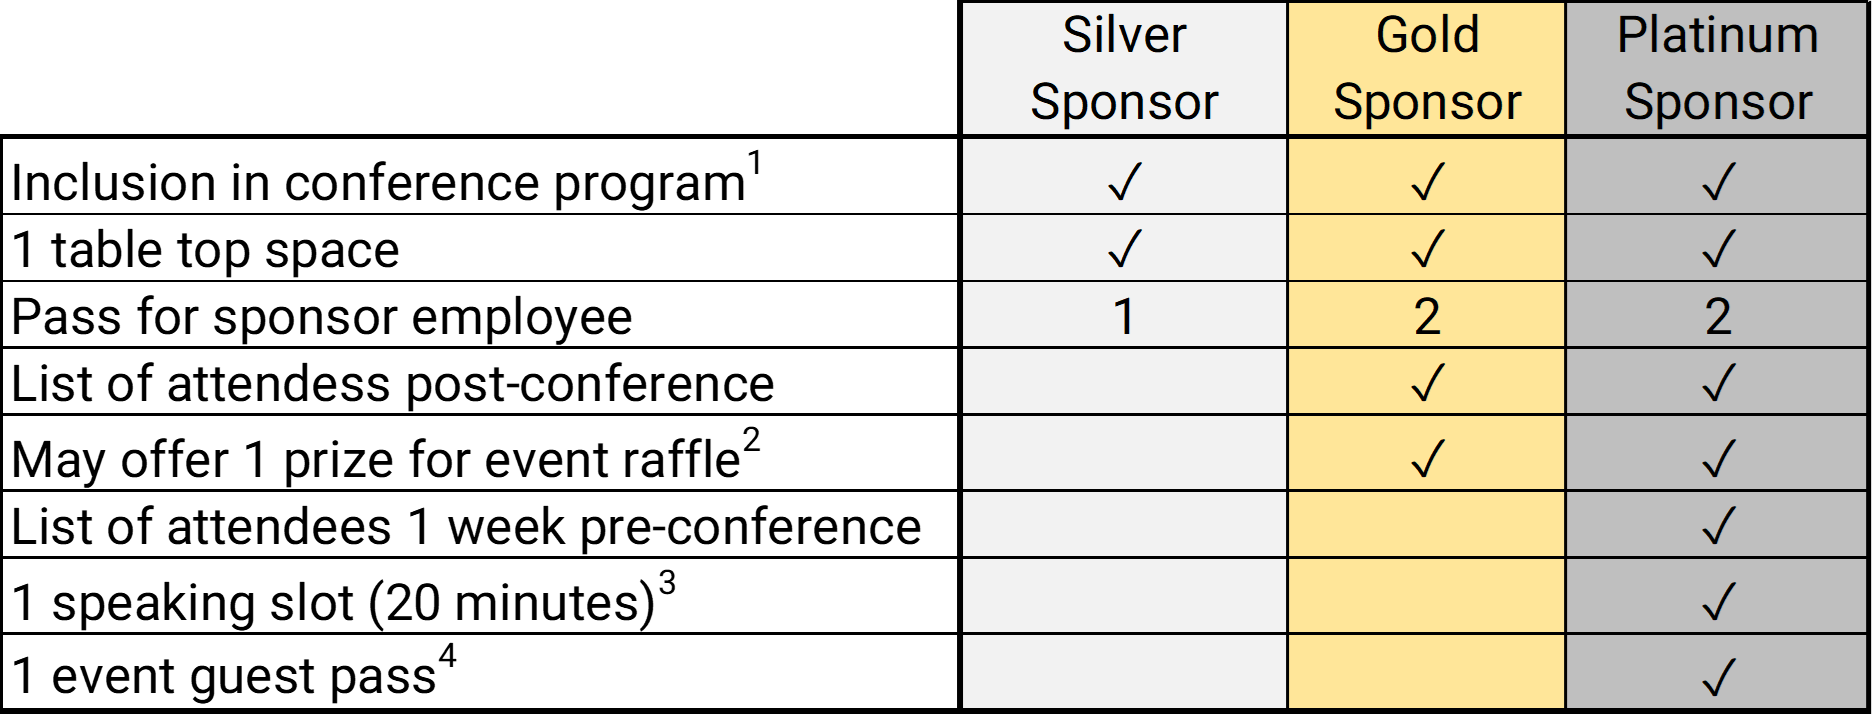 Sponsor_Benefits_Table